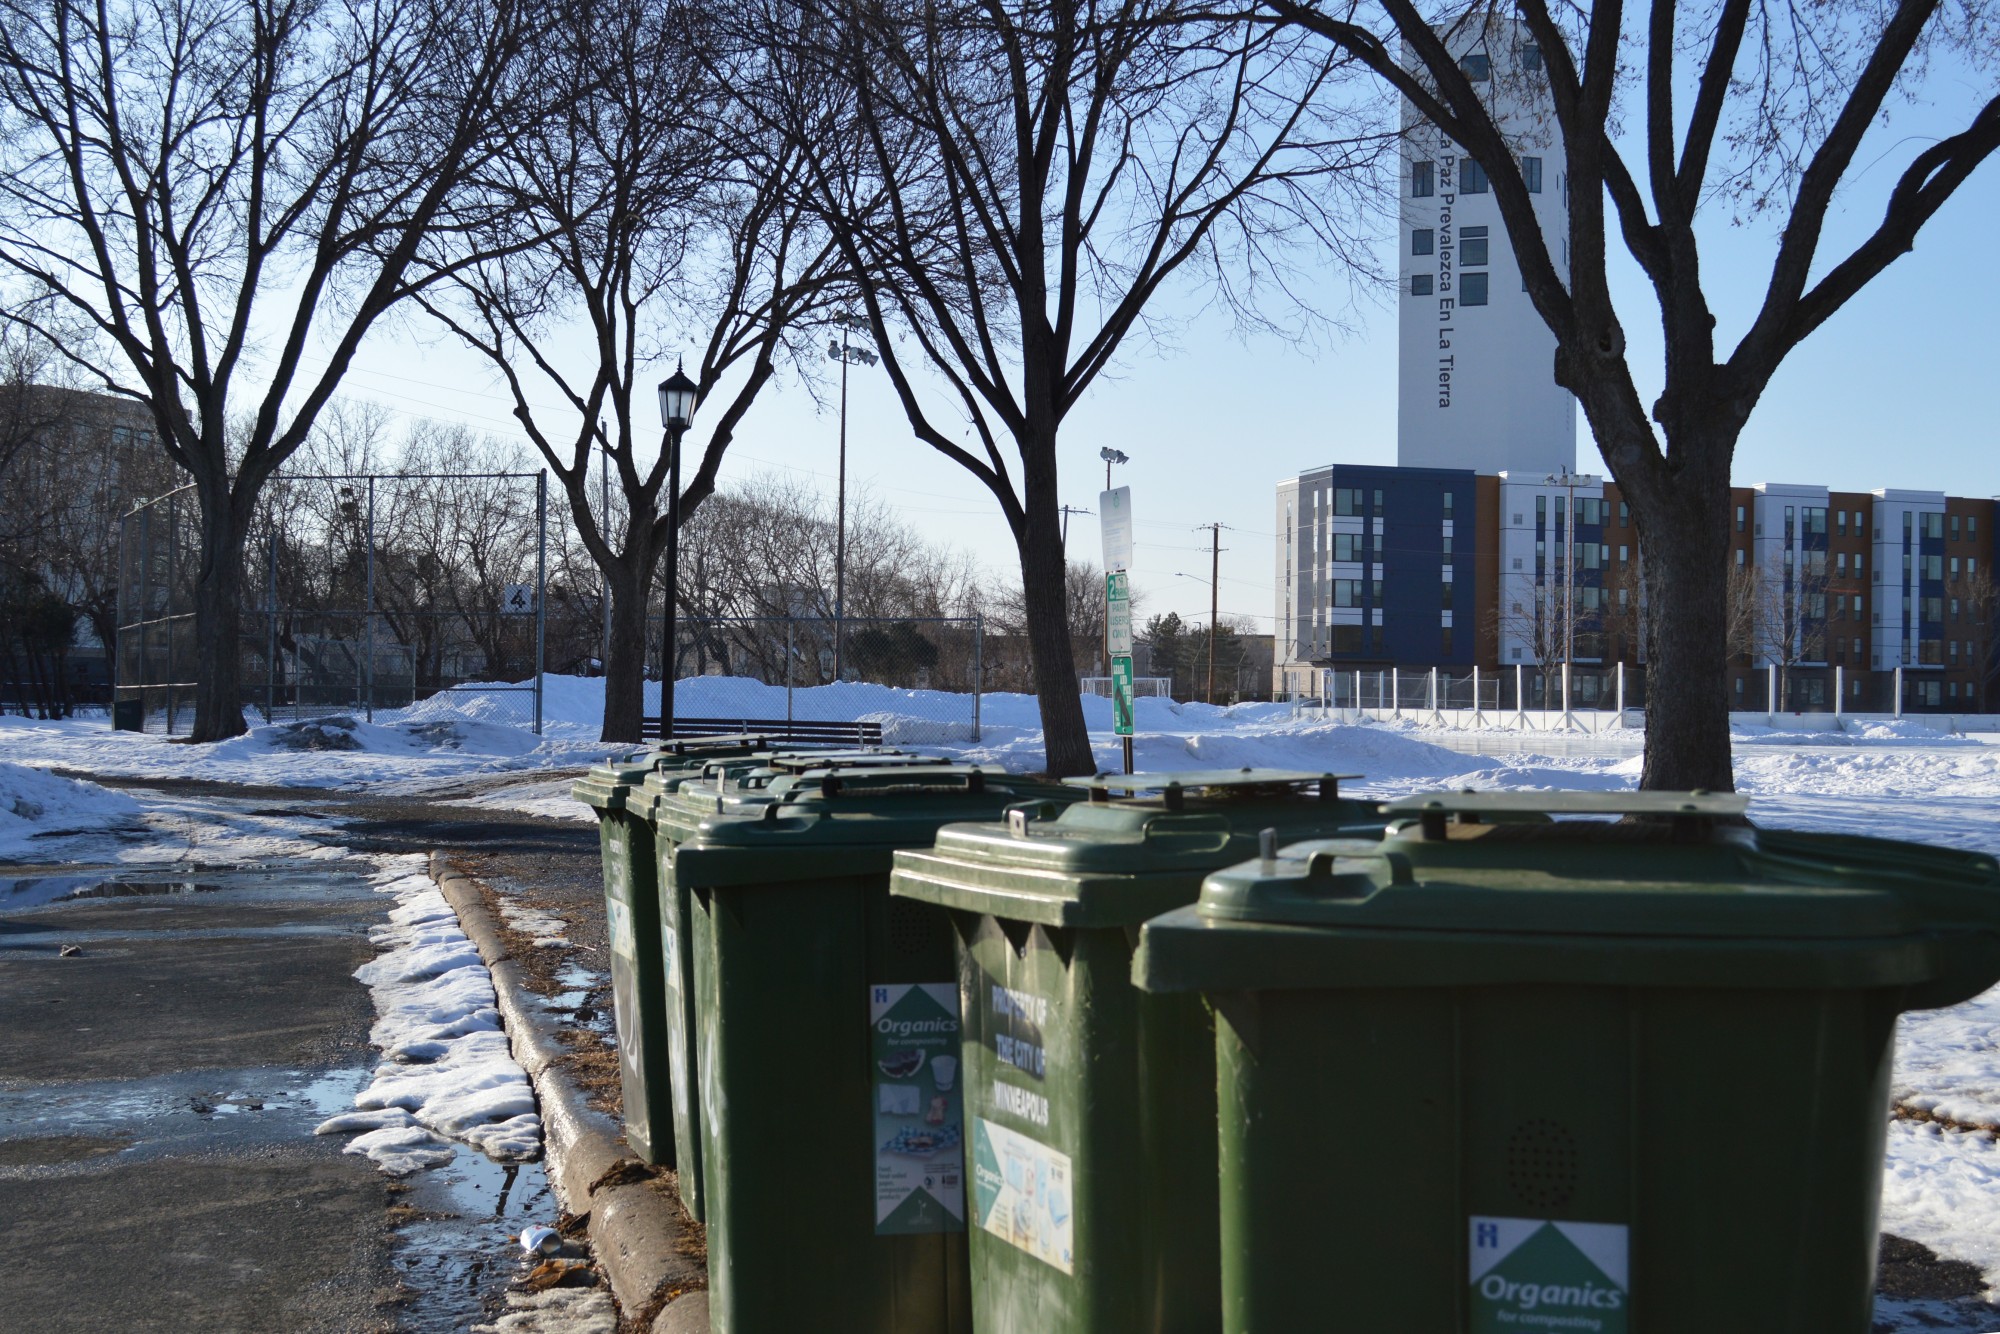 Community use organics drop-off bins are seen at Van Cleve Park on Friday, Feb. 21. 